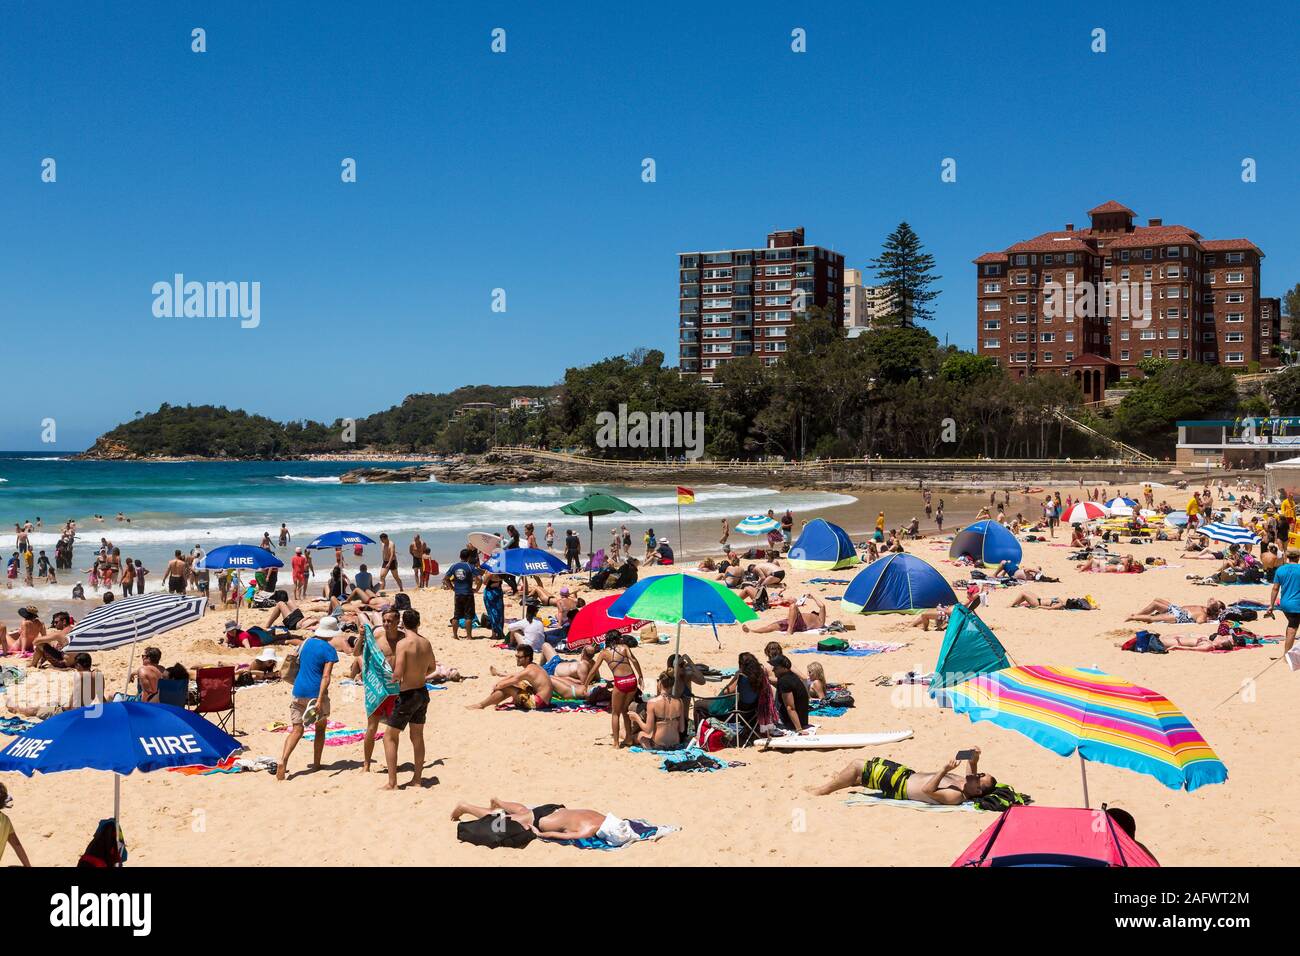 People sunbathing on Manly beach, Sydney, Australia Stock Photo